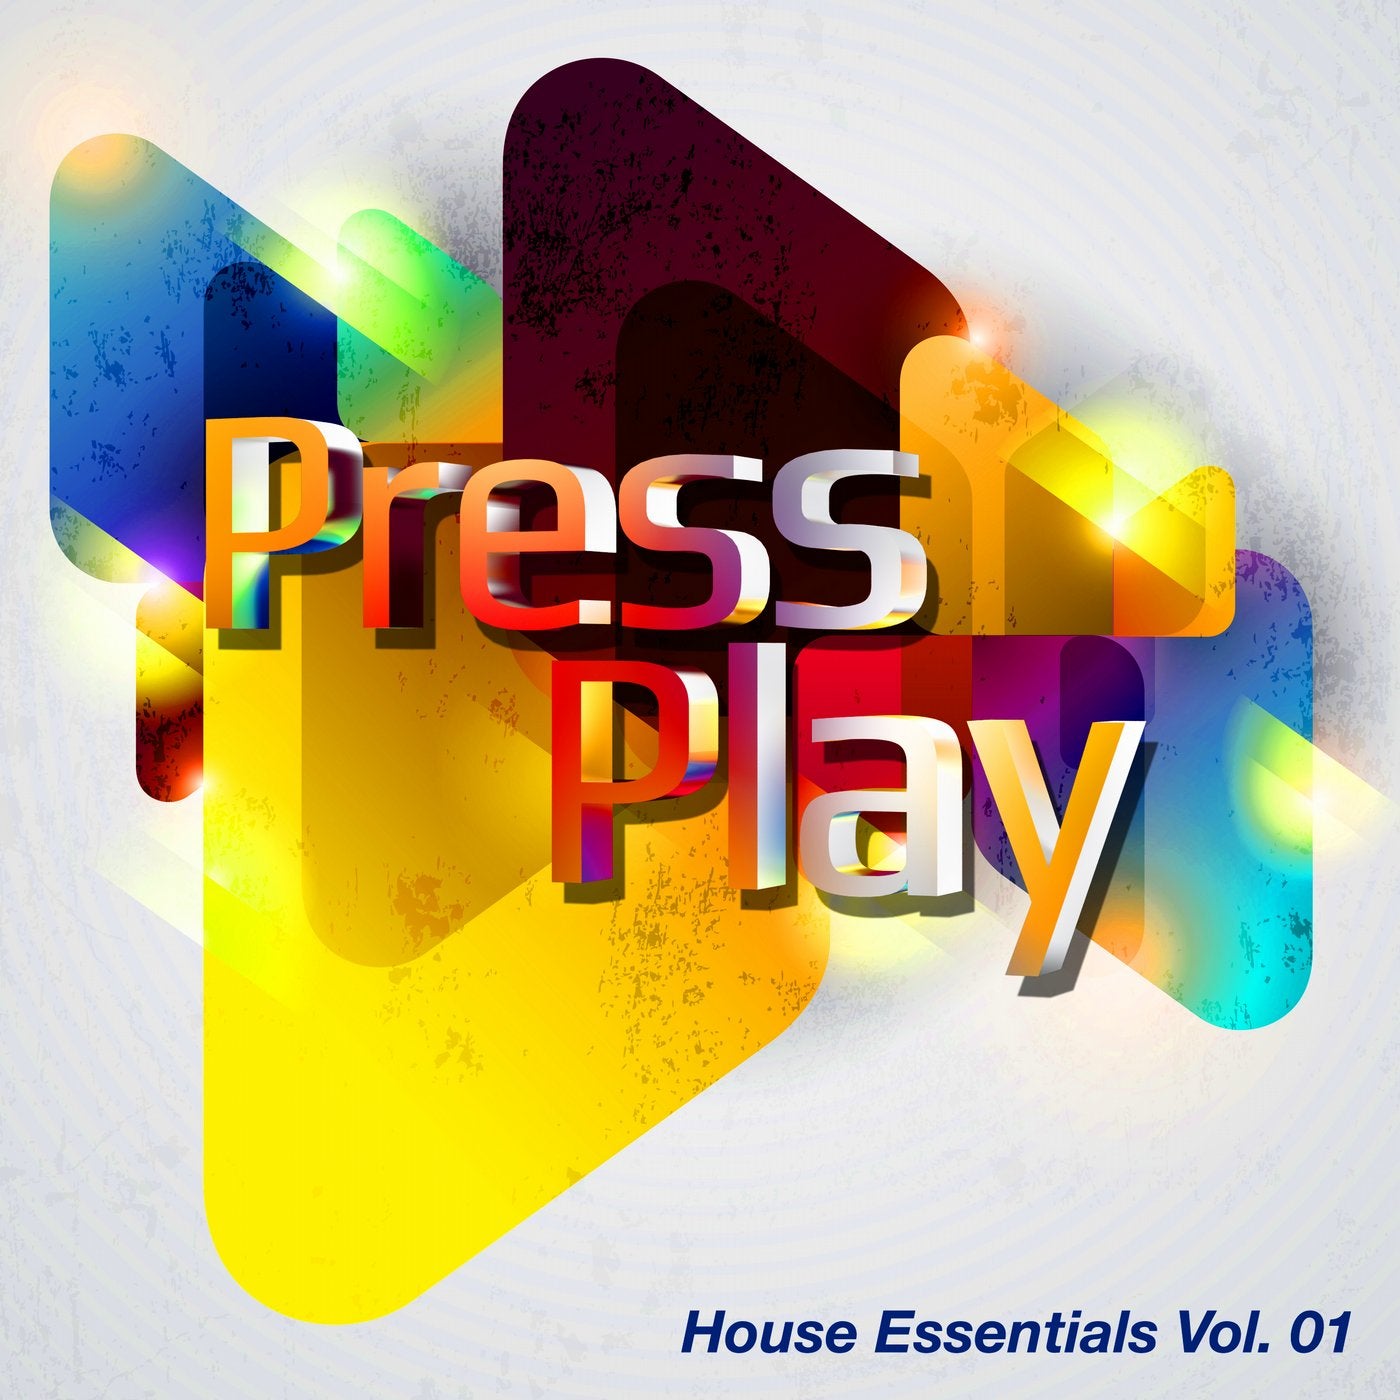 House Essentials Vol. 01